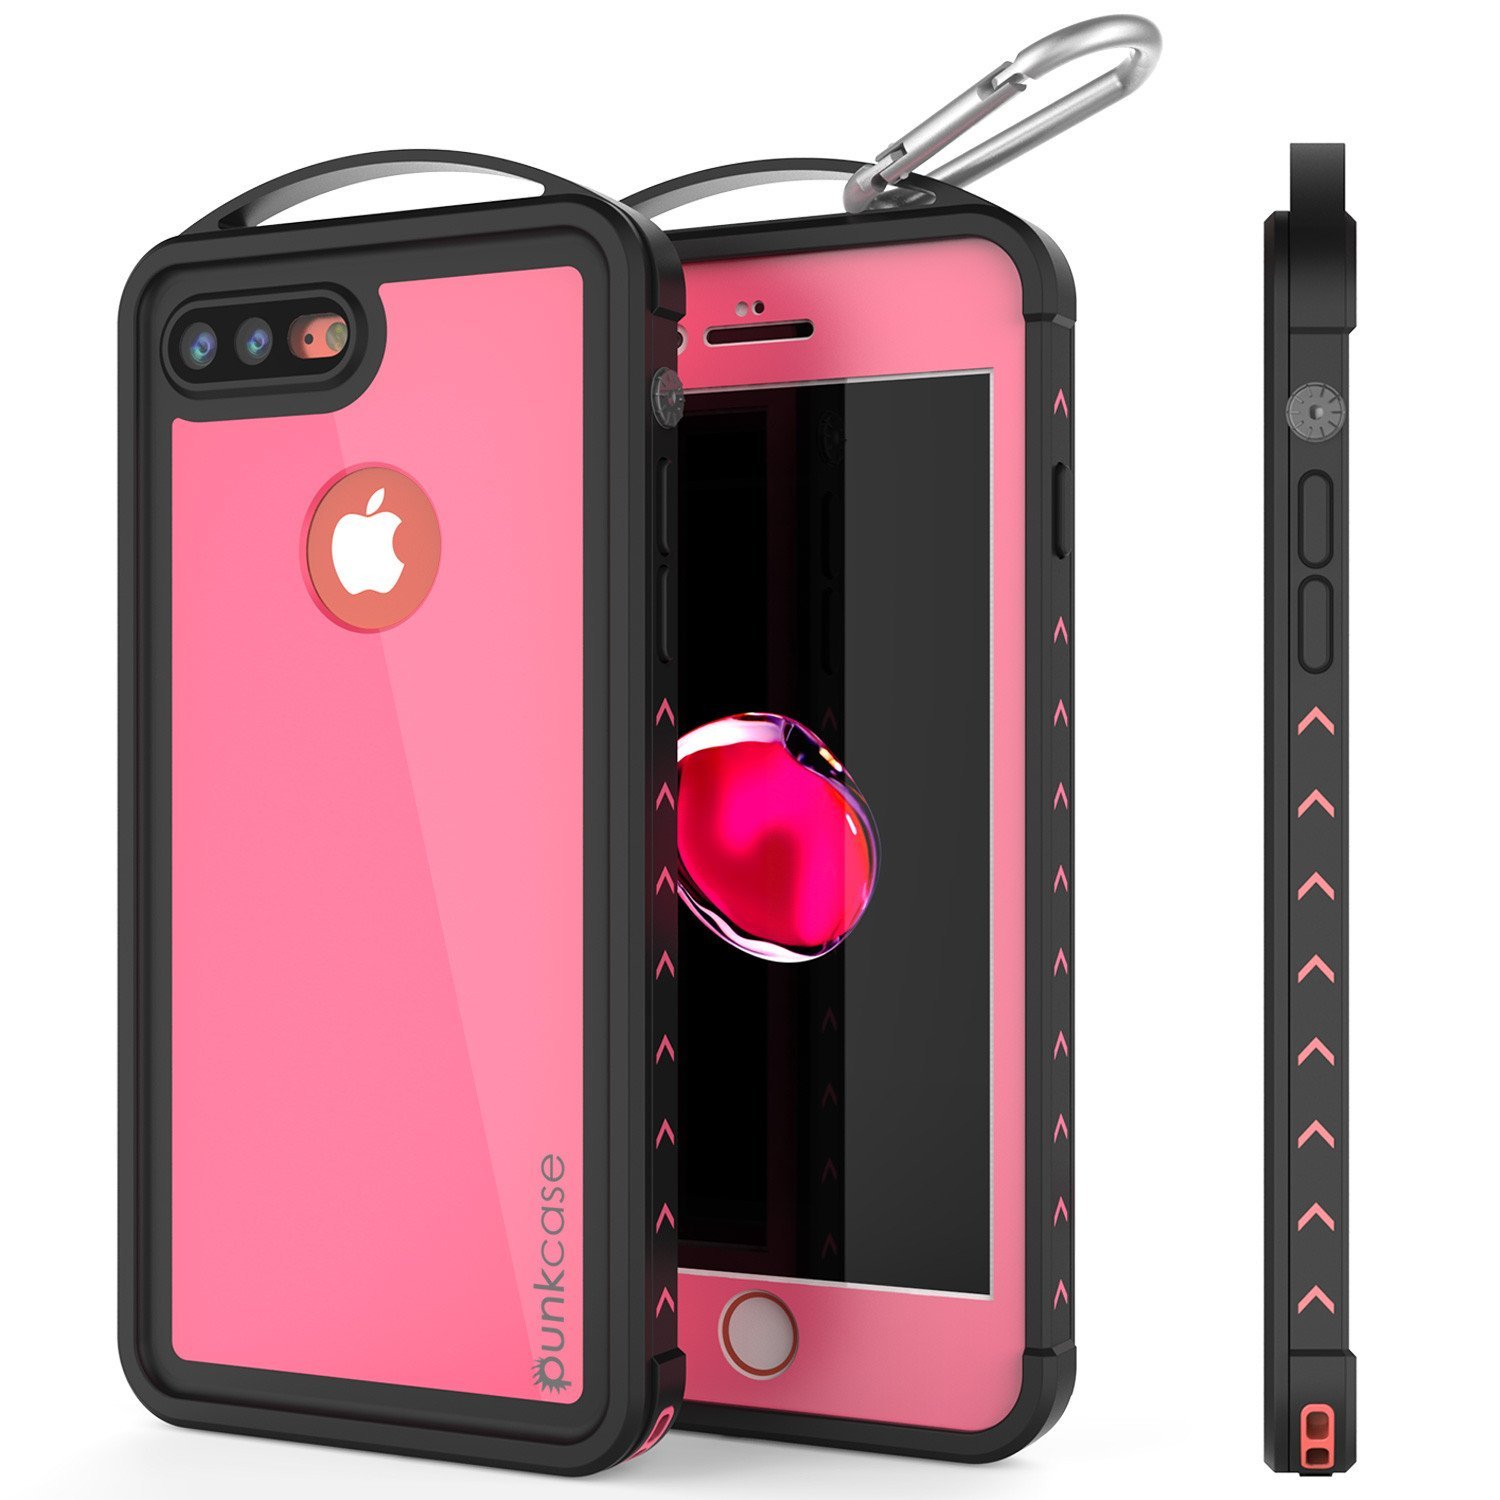 iPhone 8+ Plus Waterproof Case, Punkcase ALPINE Series ...